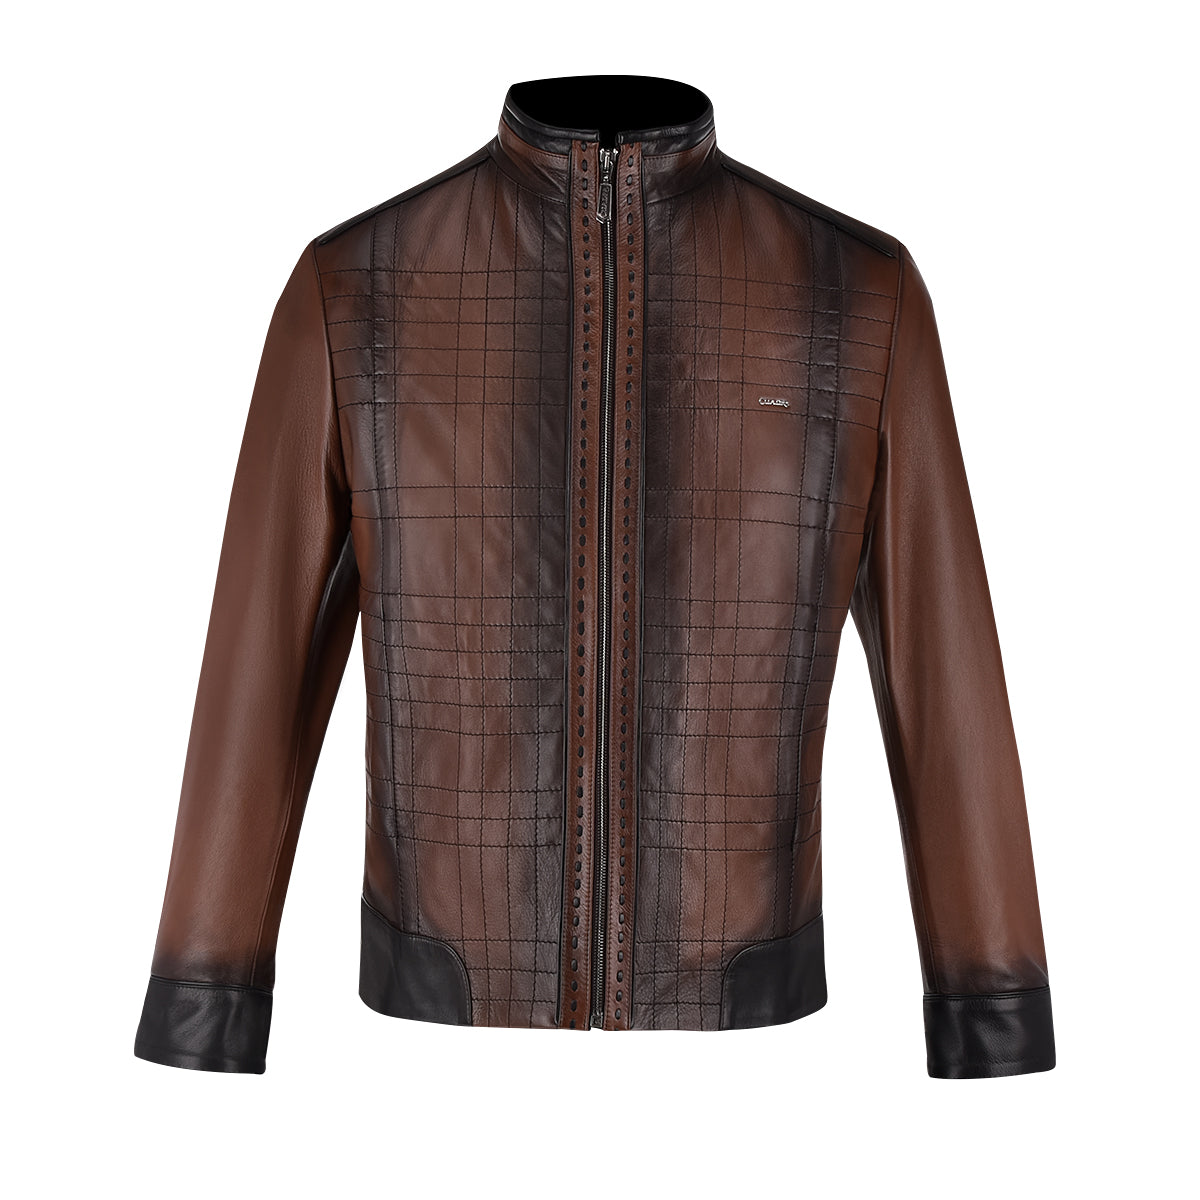 Mandarin neck dark brown leather jacket